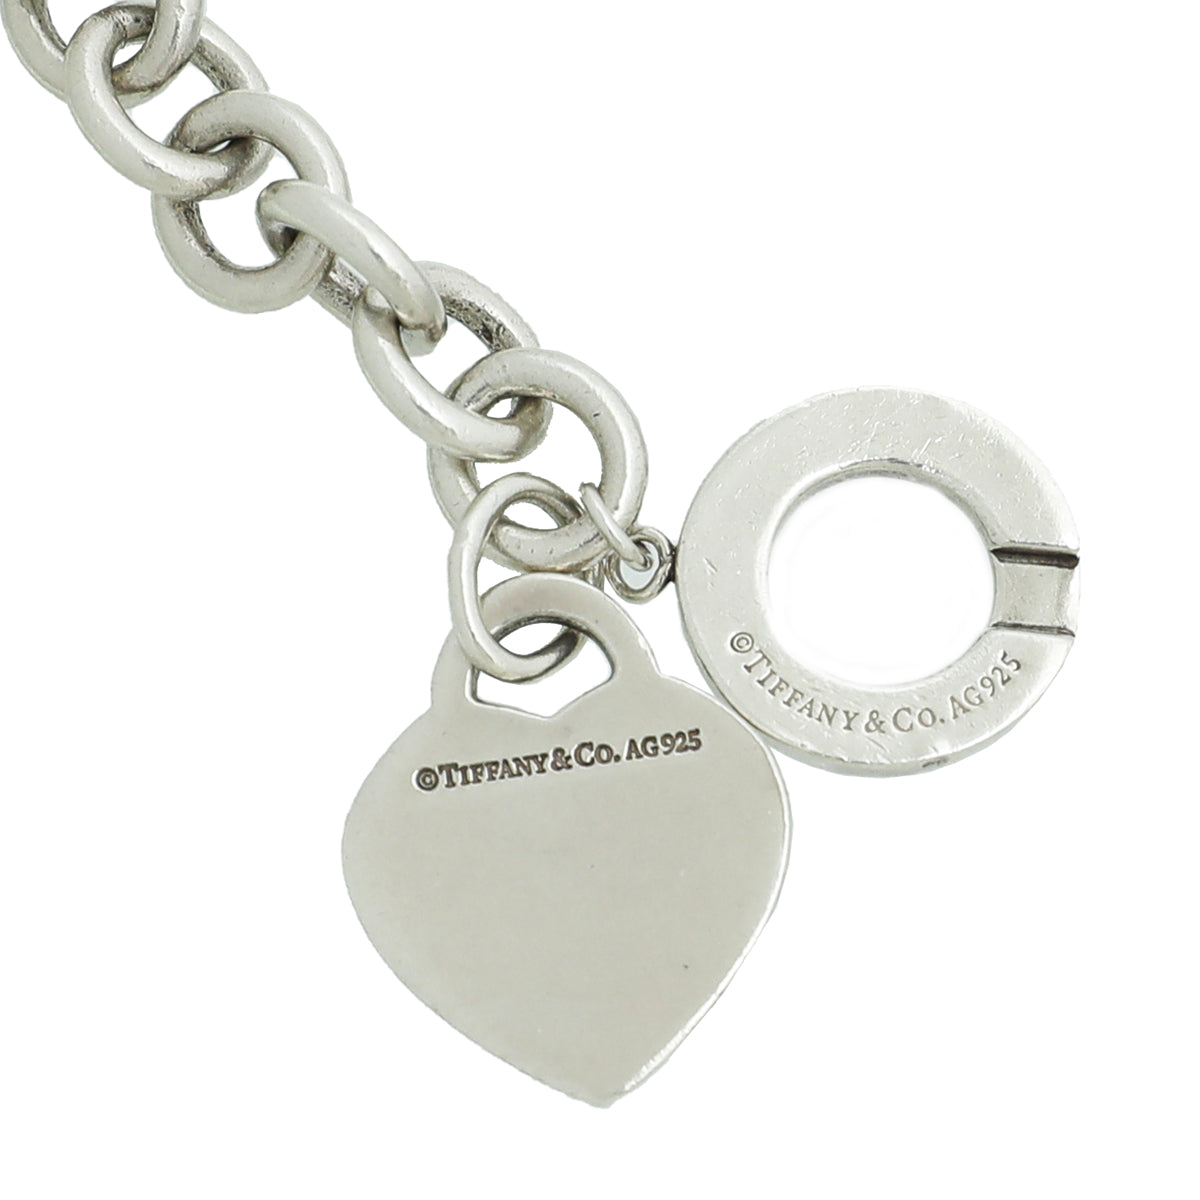 Tiffany & Co Silver Heart Tag Toggle Bracelet